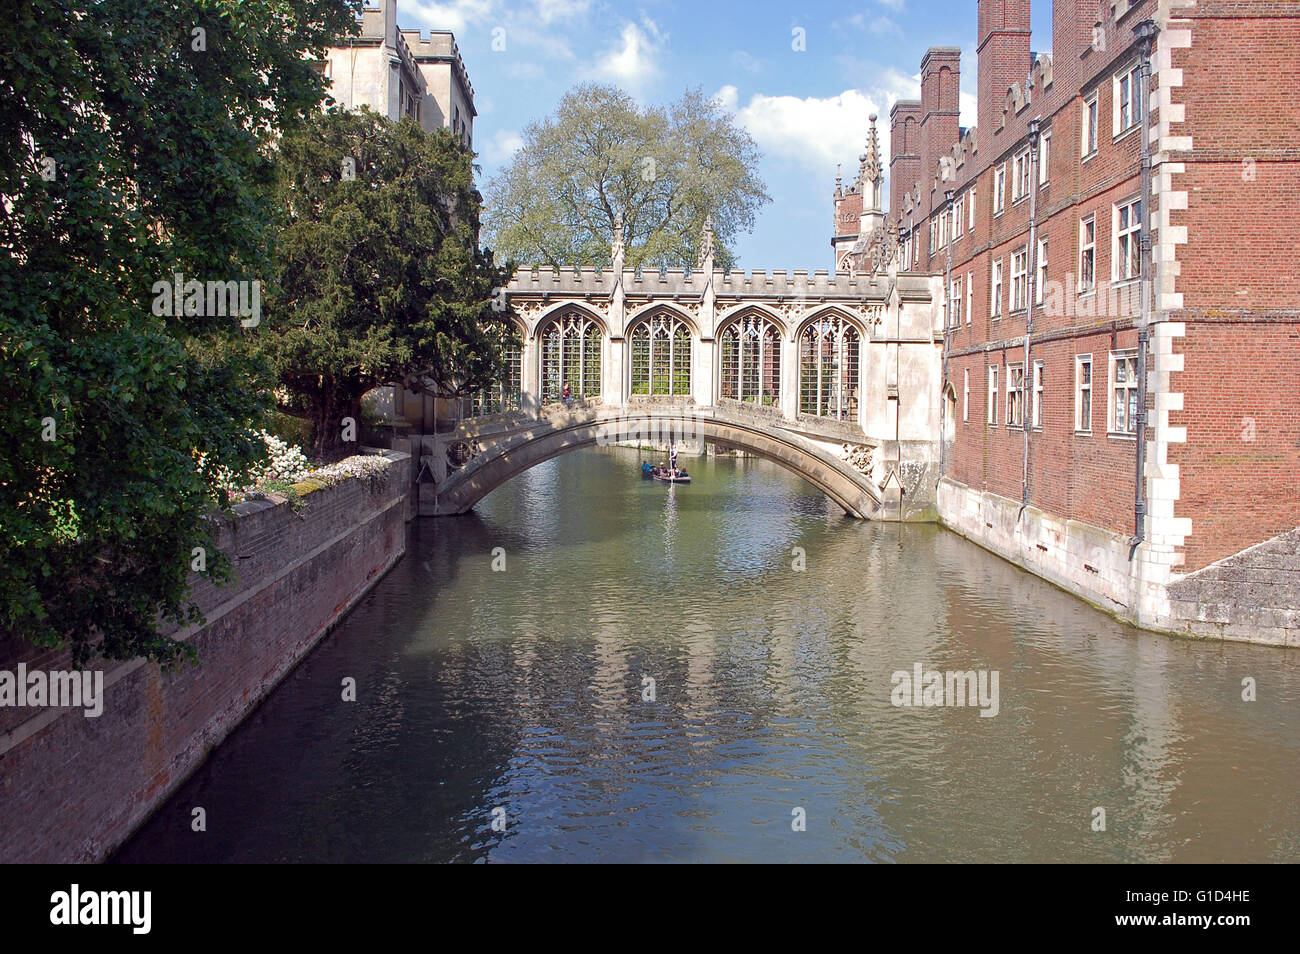 Punts passing under the Bridge of Sighs at St John's College, Cambridge University, England UK Stock Photo